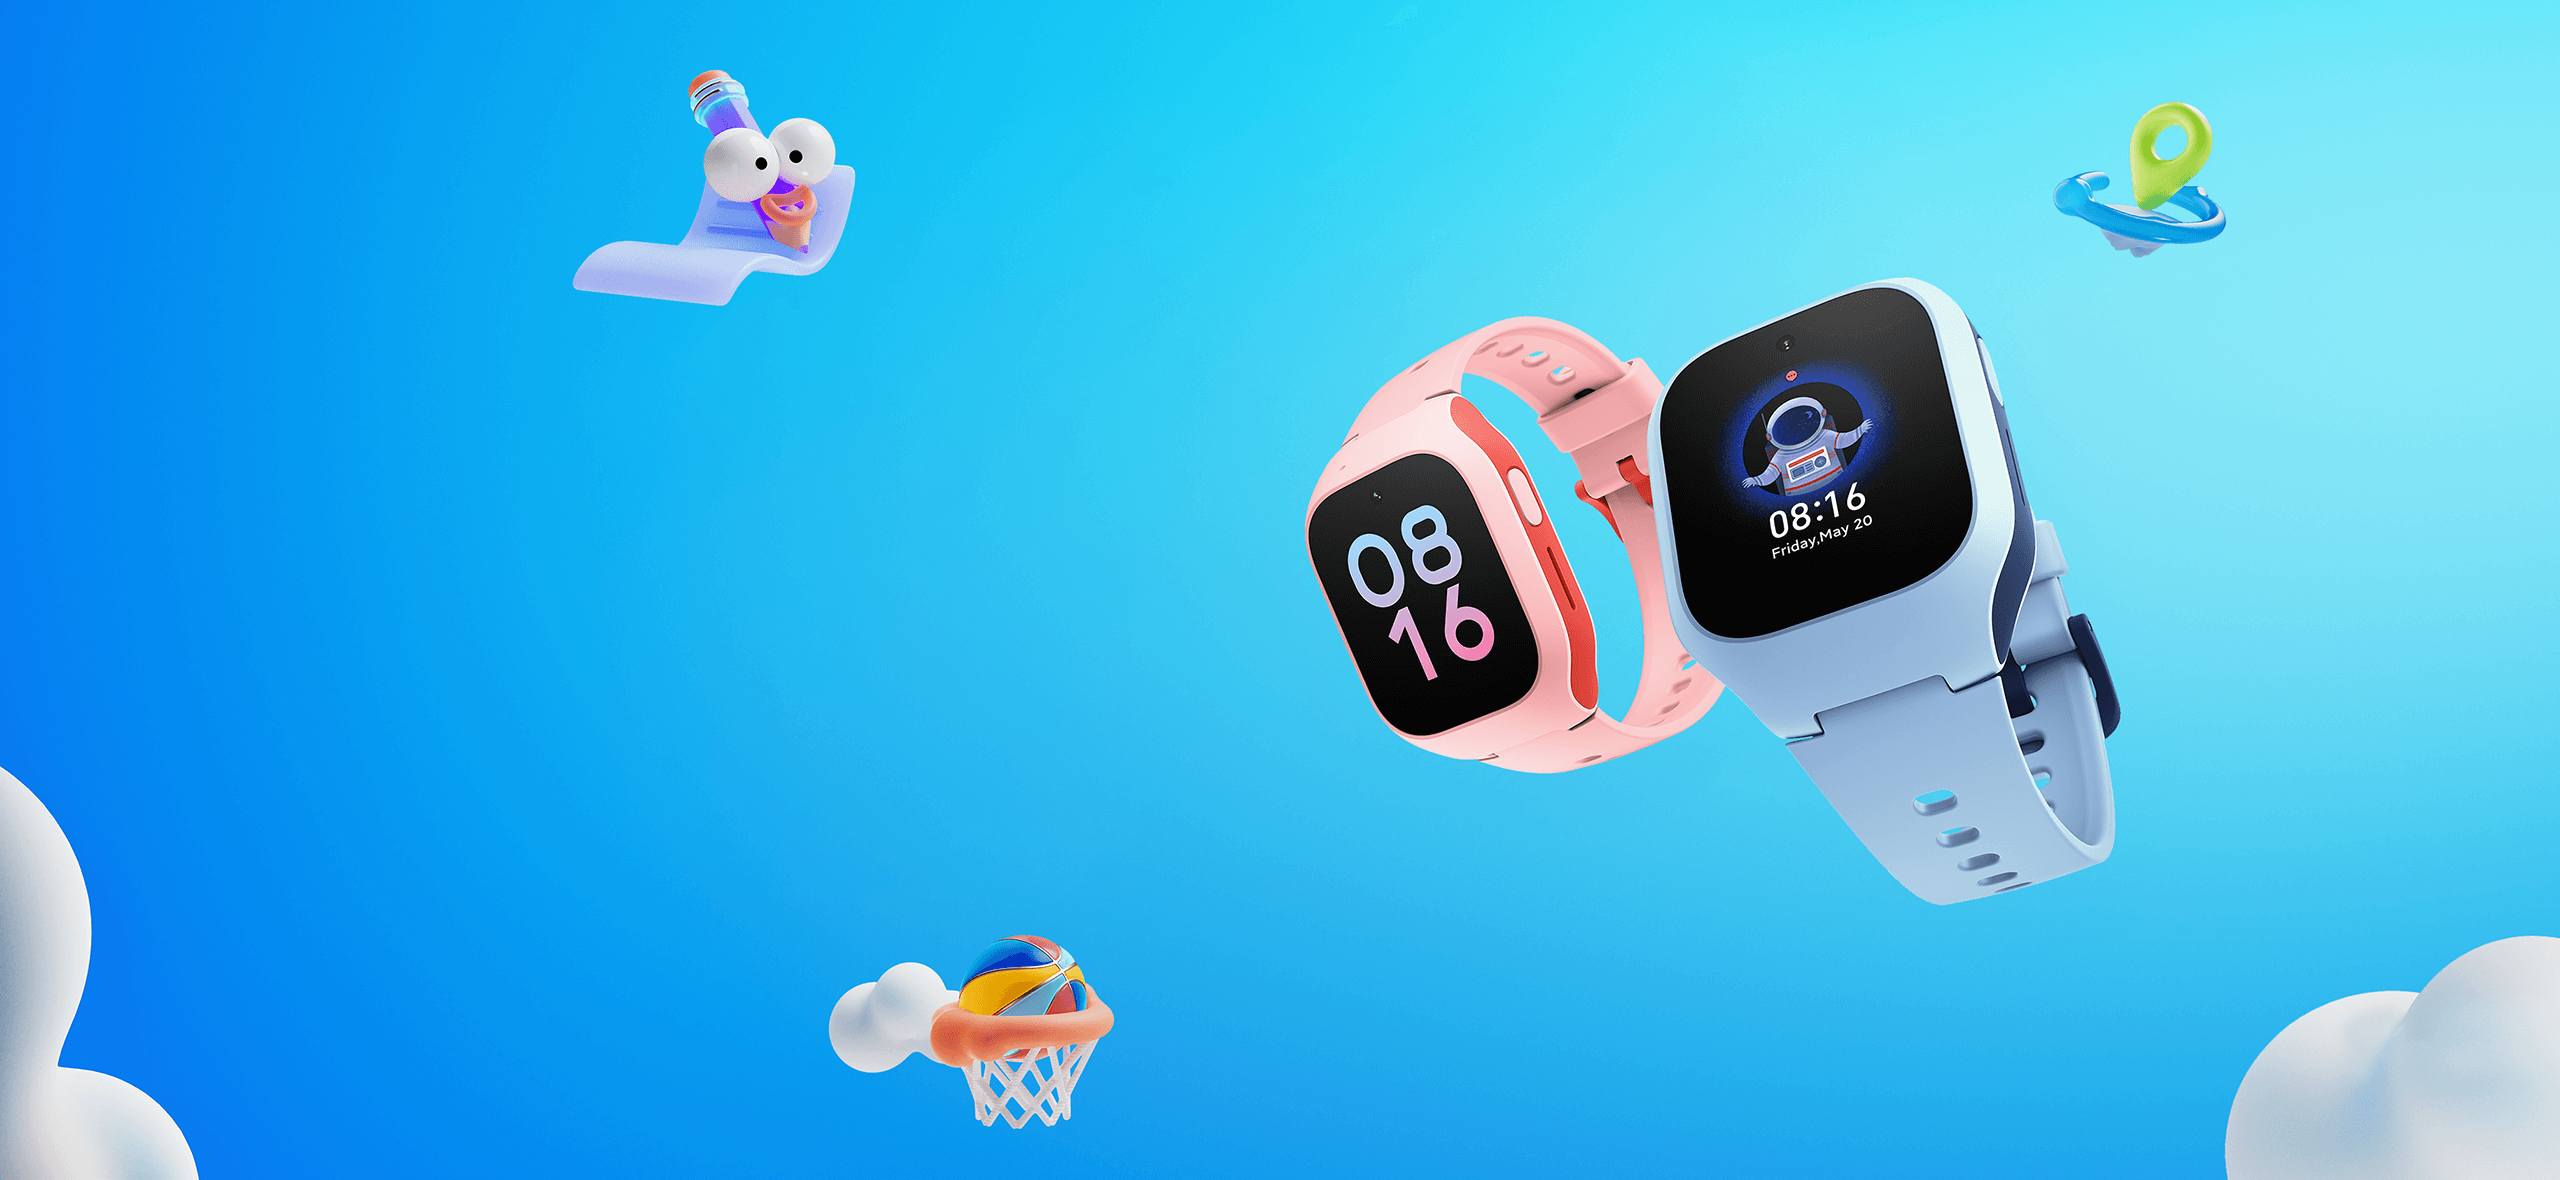 Xiaomi Smart Kids Watch